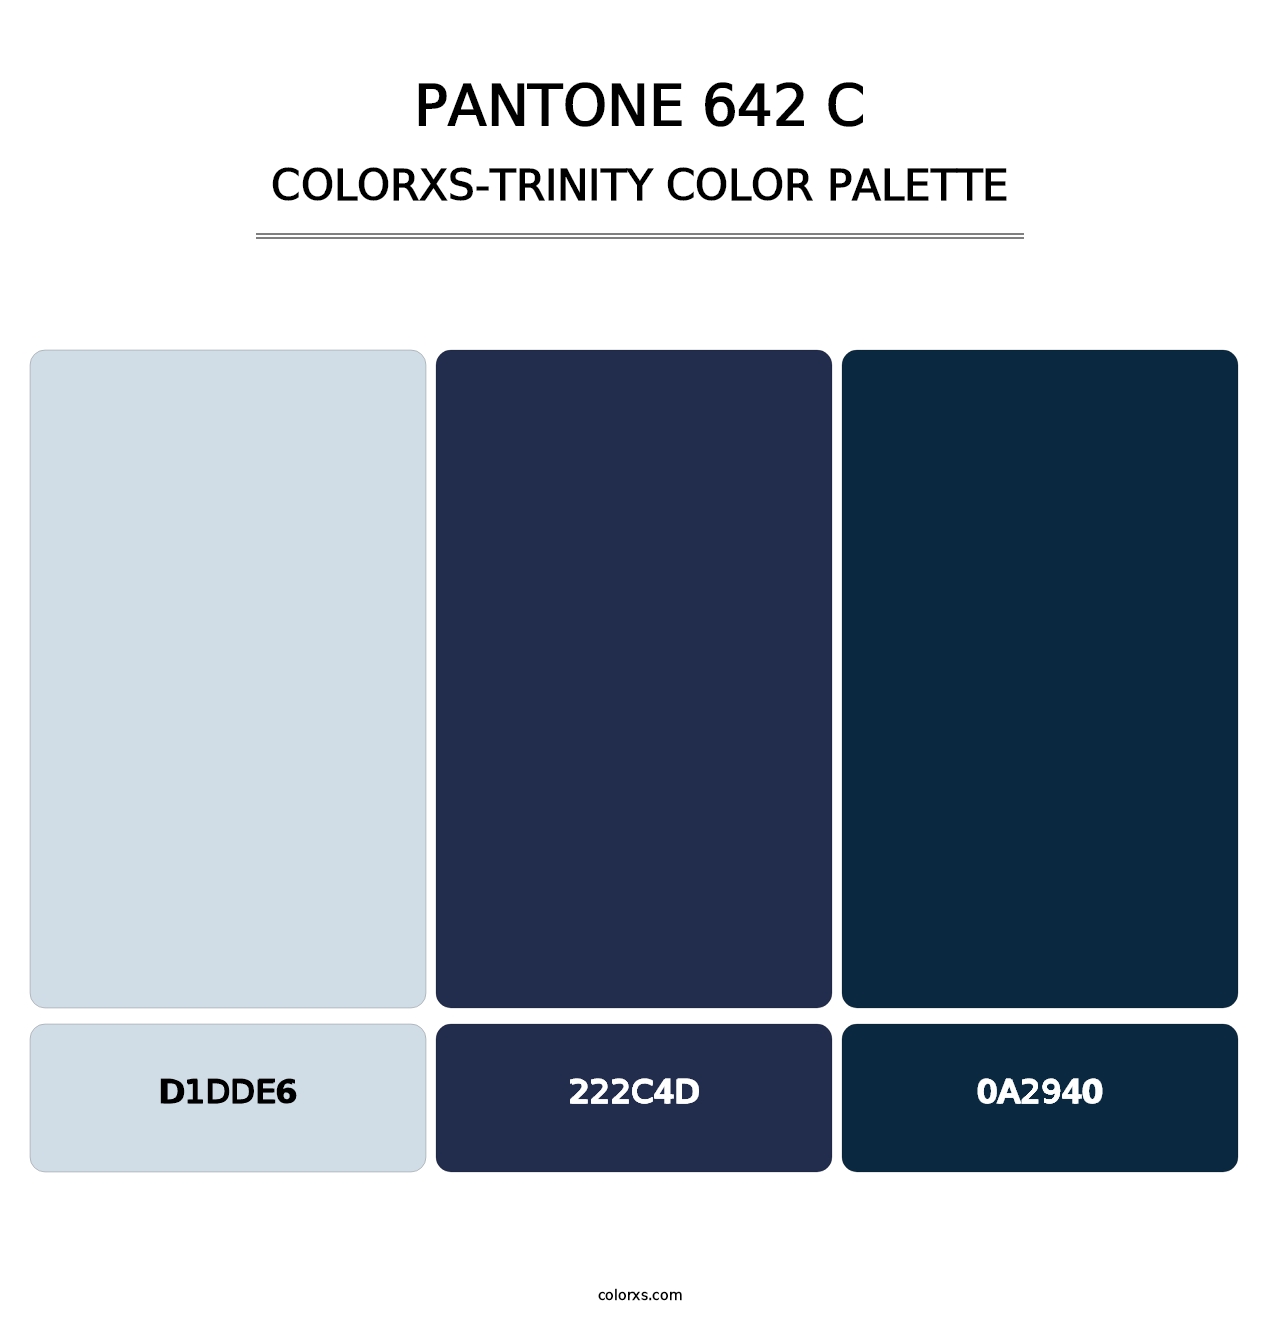 PANTONE 642 C - Colorxs Trinity Palette